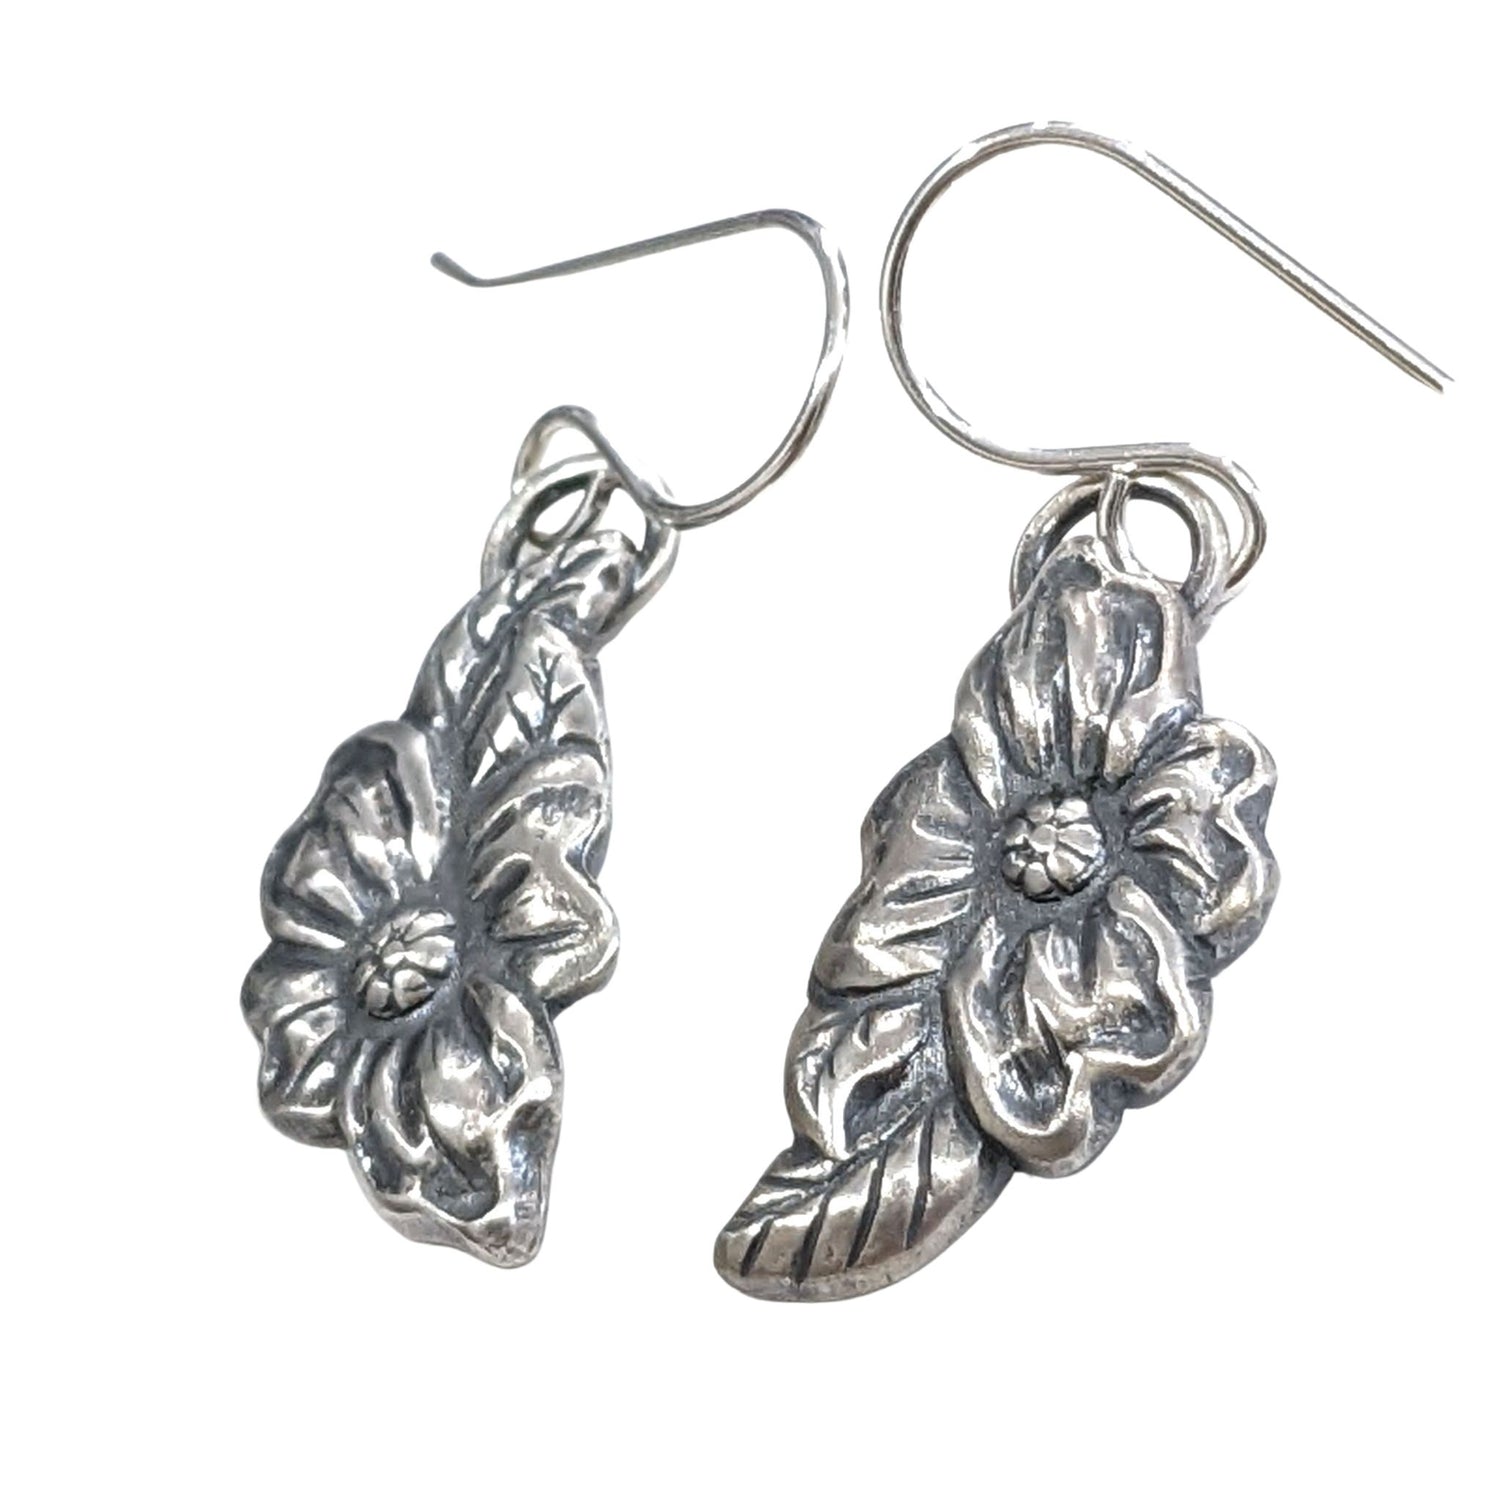 Stering silver dogwood flower earrings. The Design is asymmetric, the left earring has a leaf above the flower and the right earring has a leaf below the flower.